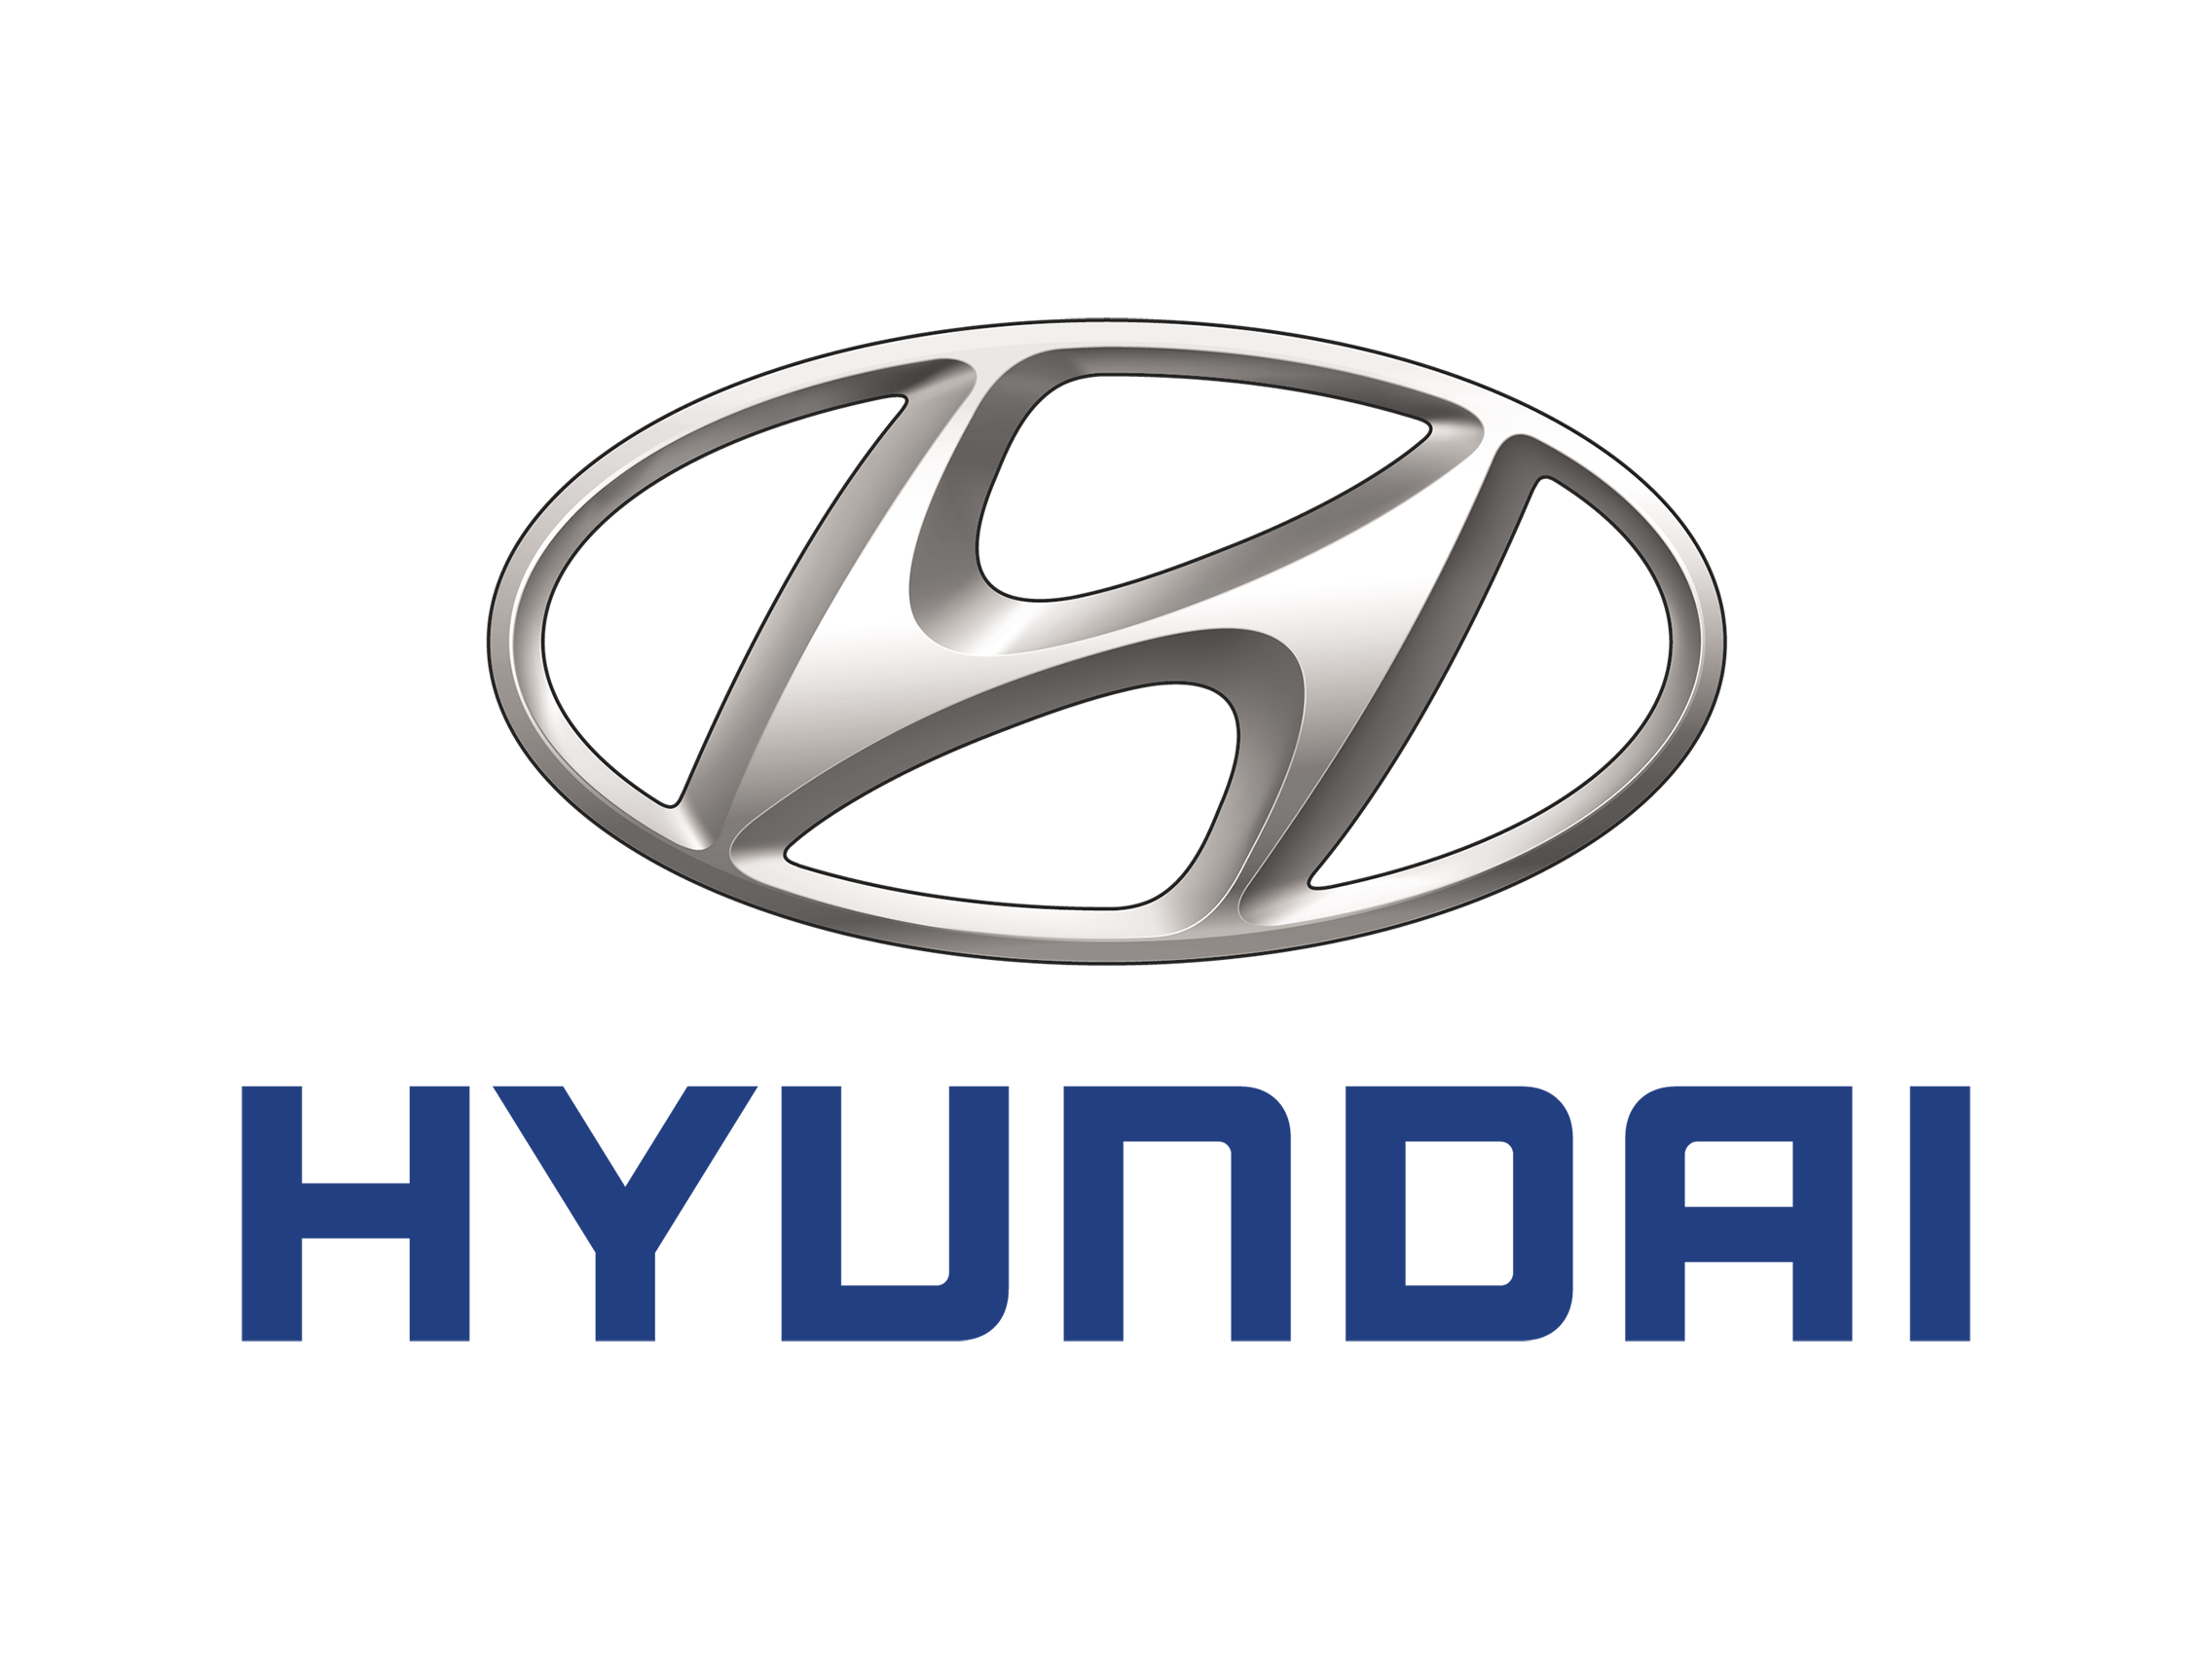 Old Hyundai Logo - Hyundai logo old - Logok